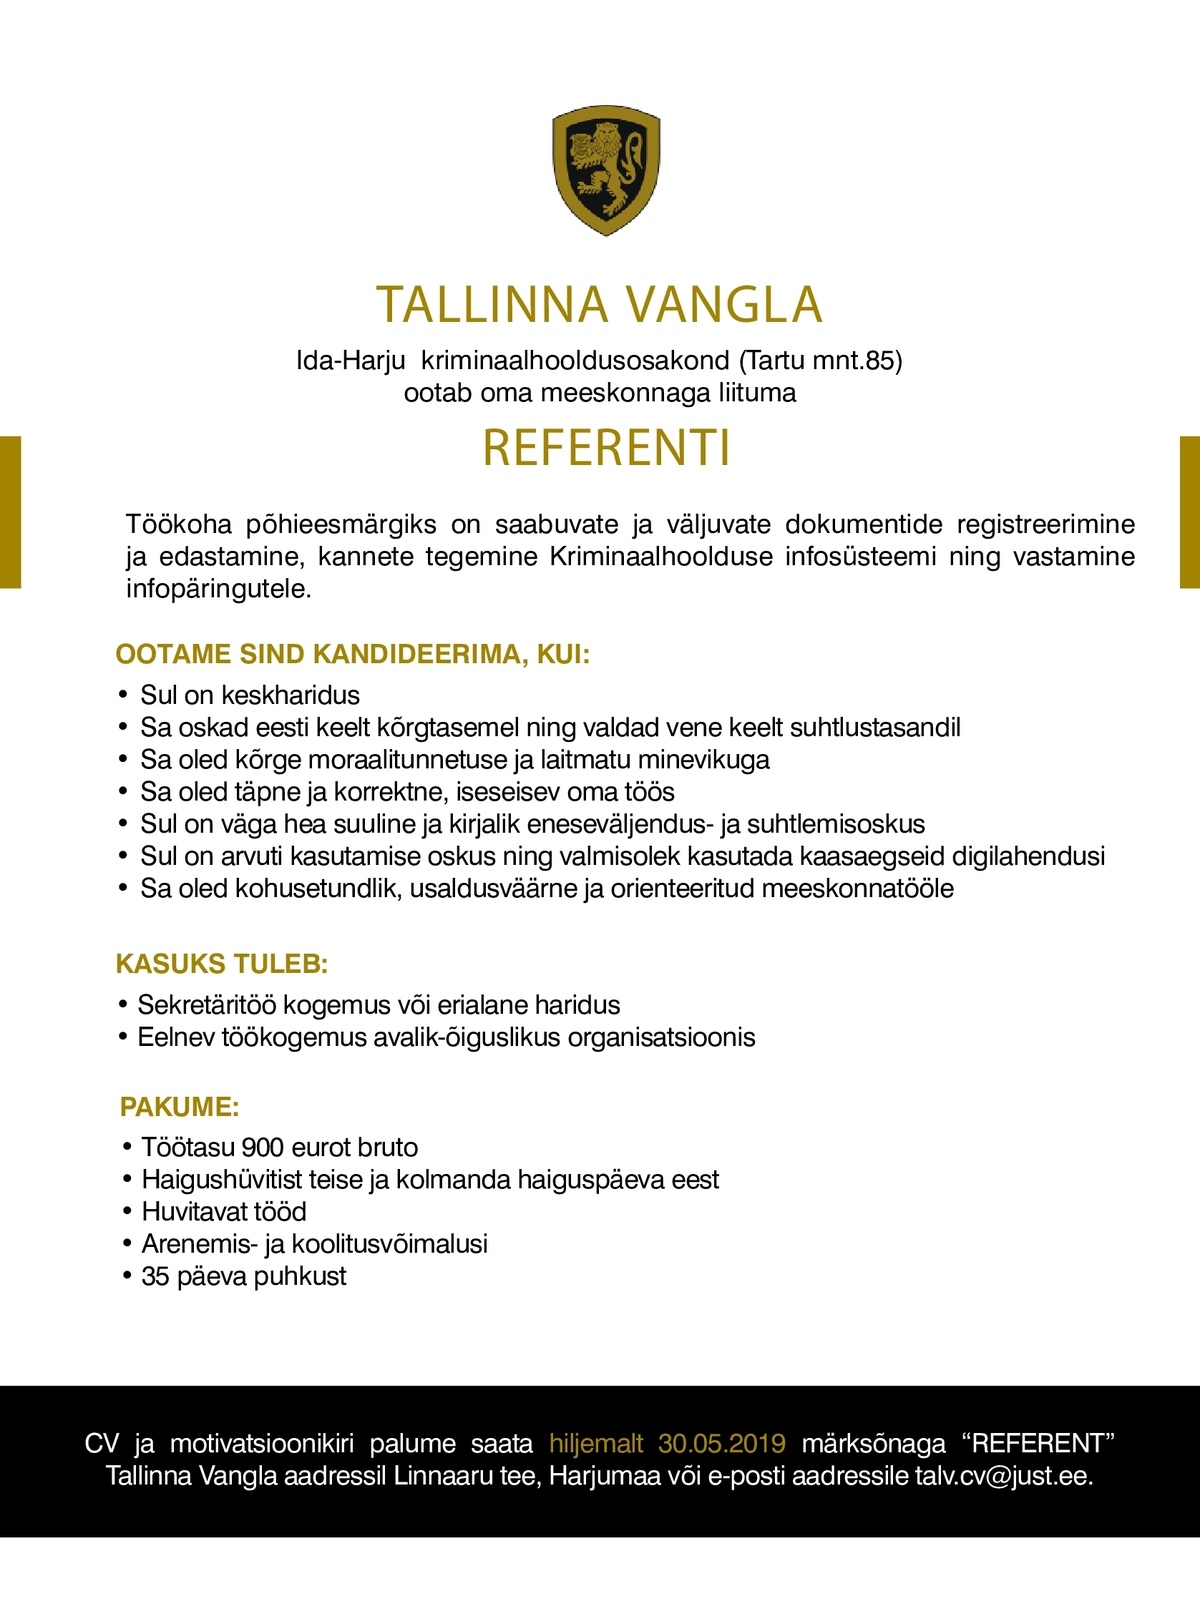 Tallinna Vangla Referent